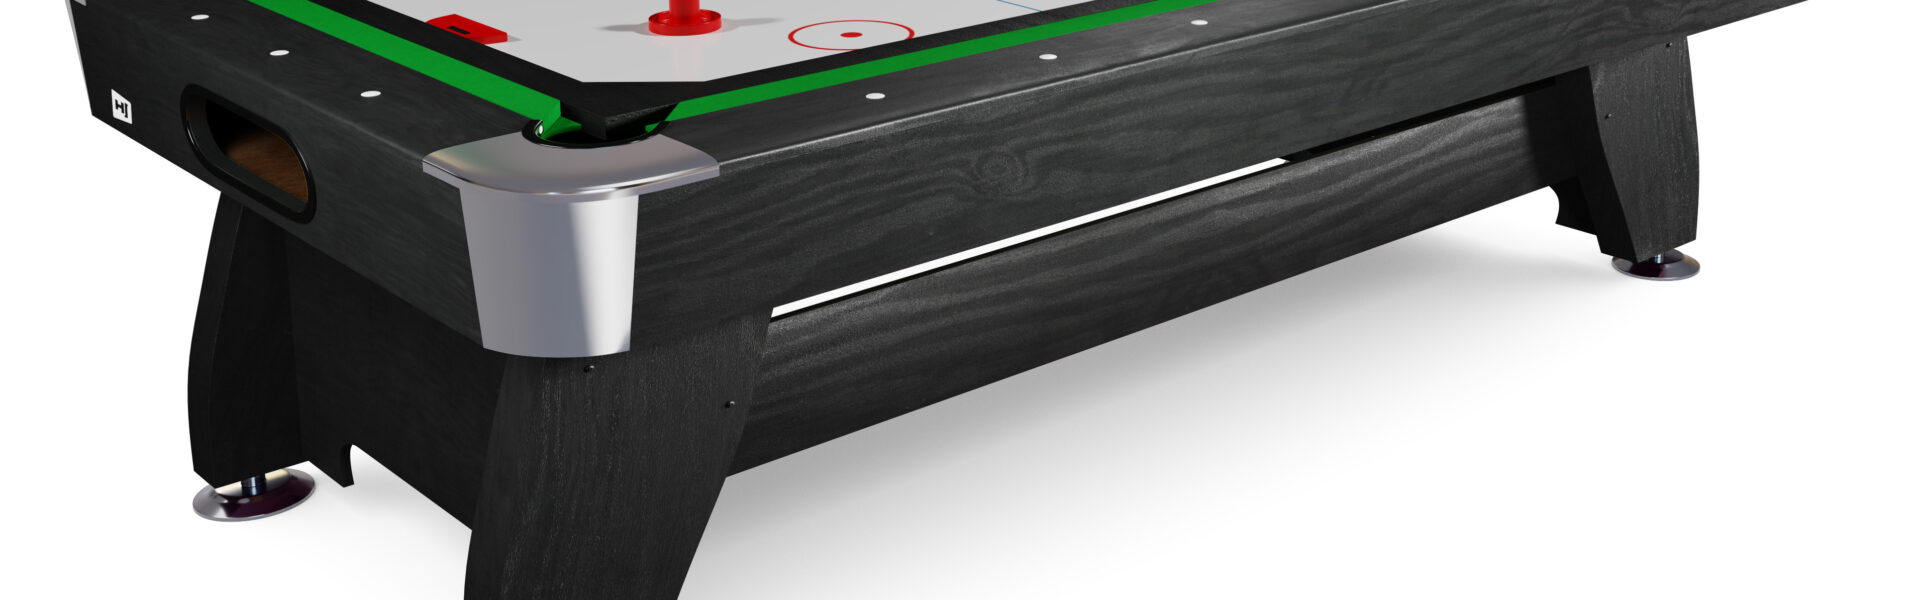 Nadstavec na biliardový stôl Ping-Pong/Hokej 9ft